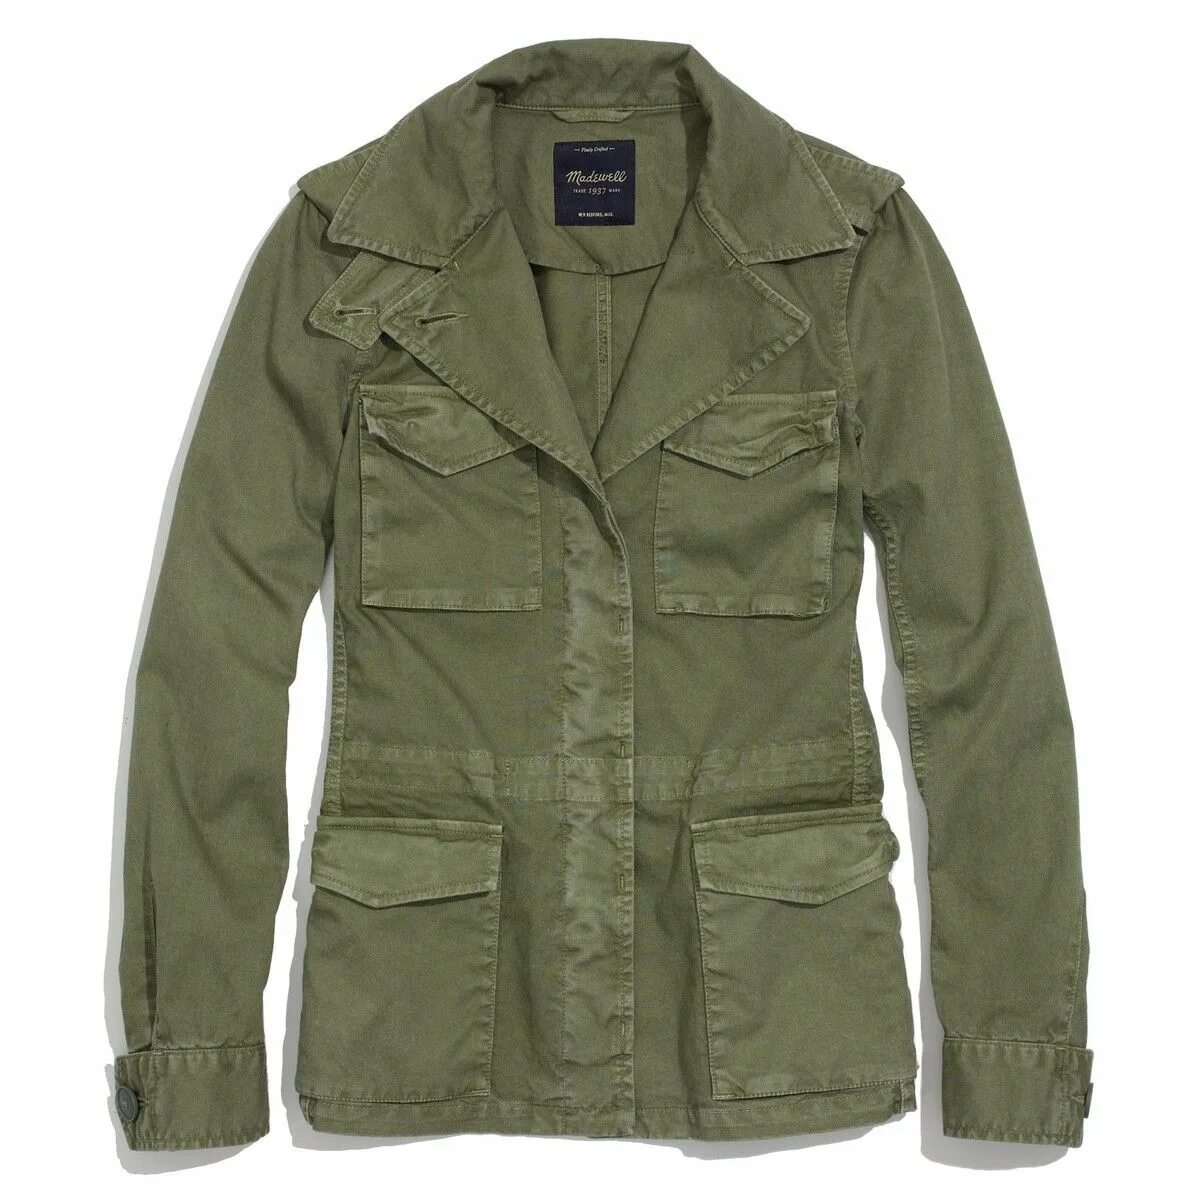 Оливковая куртка мужская. Куртка олива милитари мужская. Пиджак олива милитари мужской. Куртка милитари хаки. M43 Jacket.